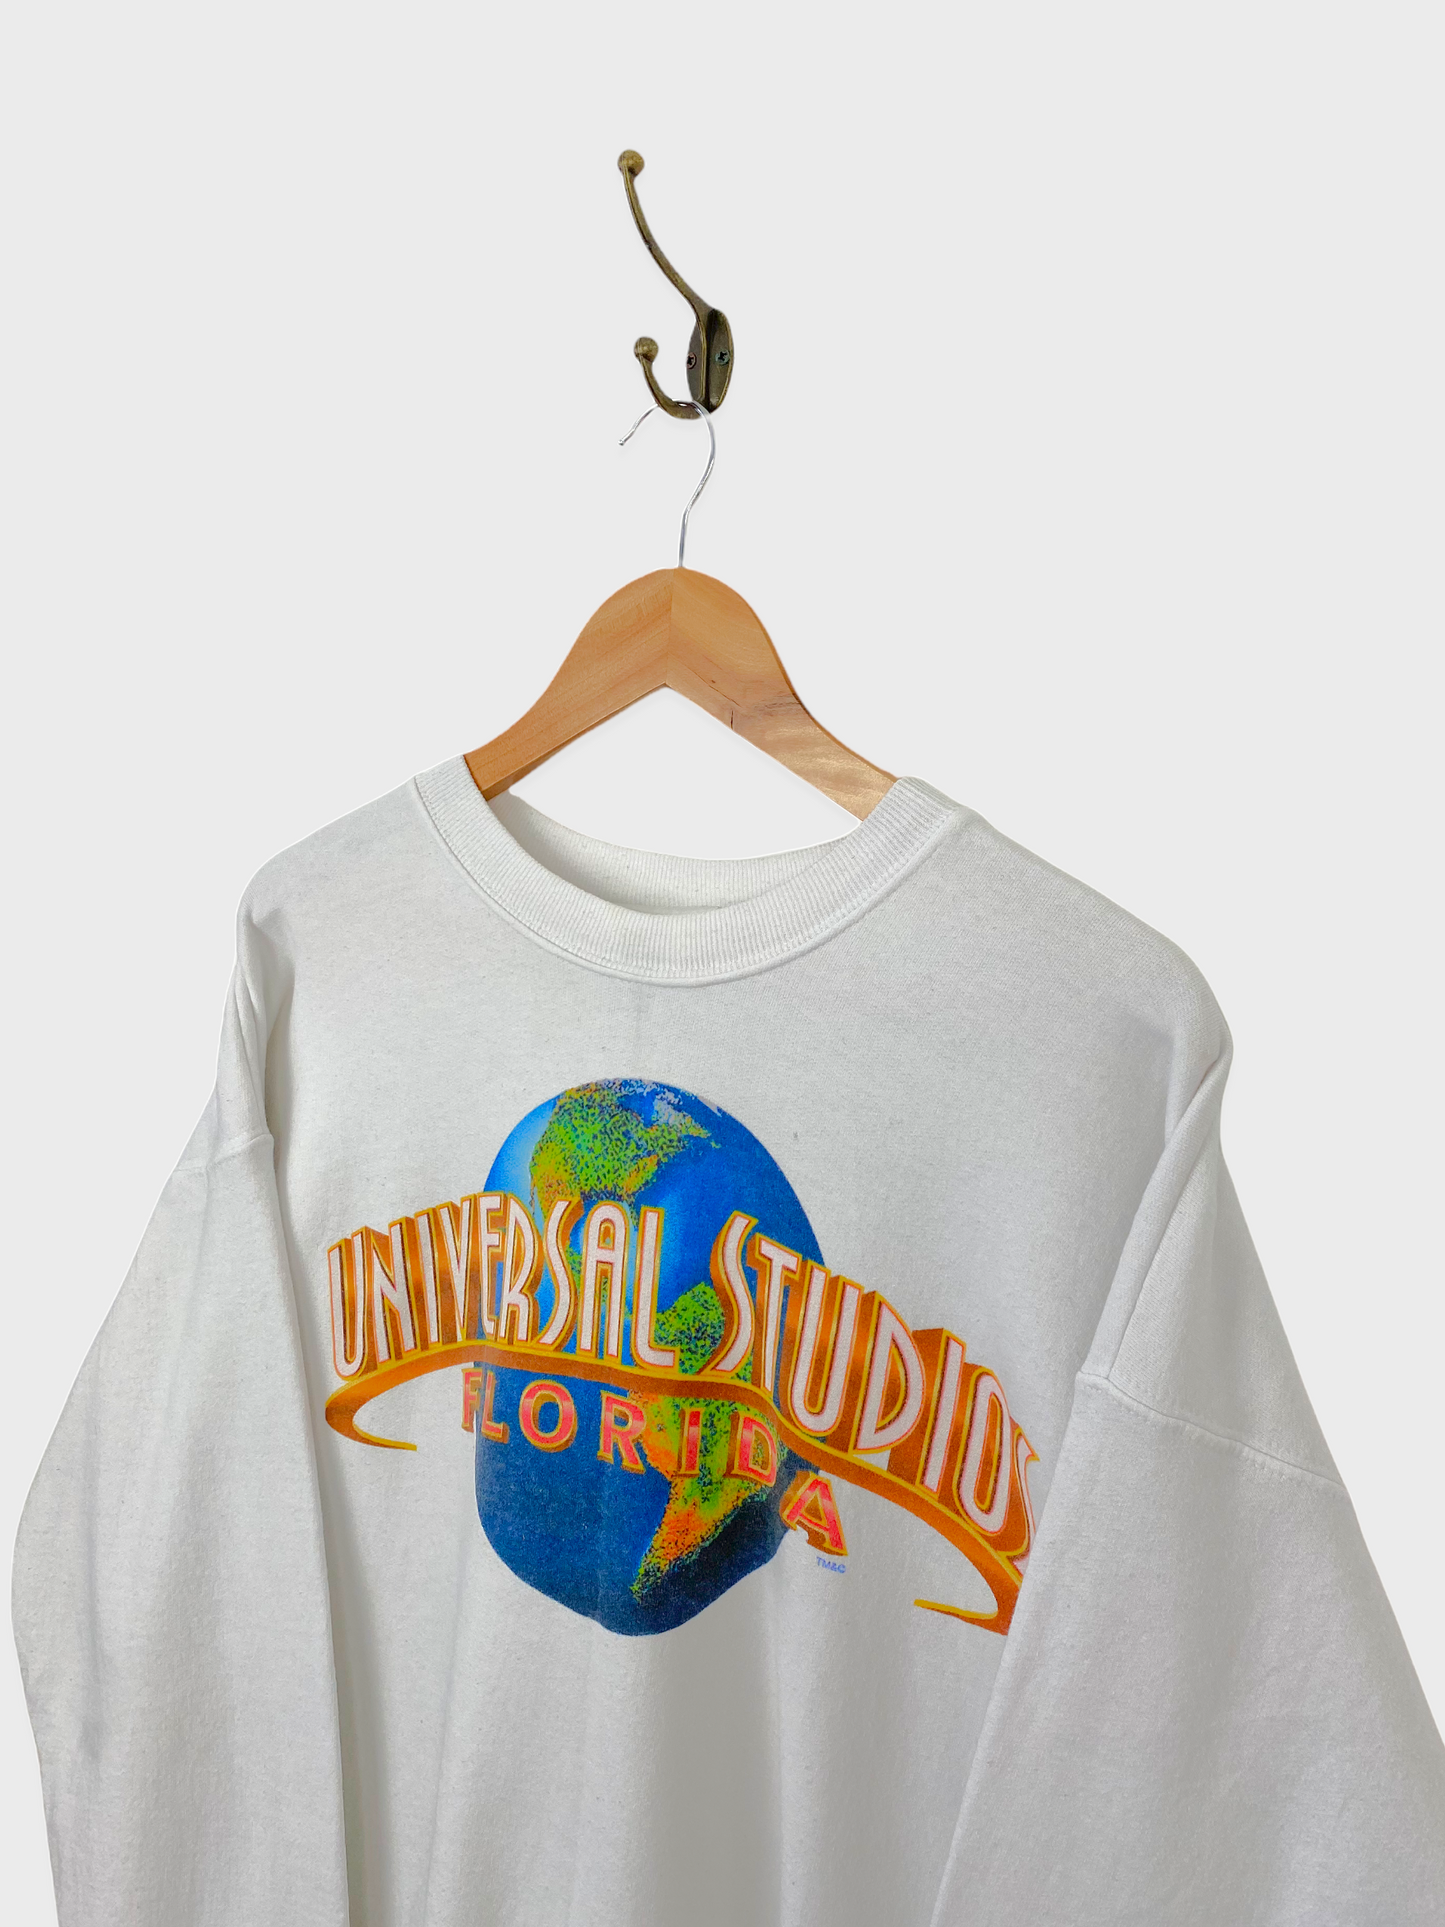 90's Universal Studios Florida USA Made Vintage Sweatshirt Size 10-12